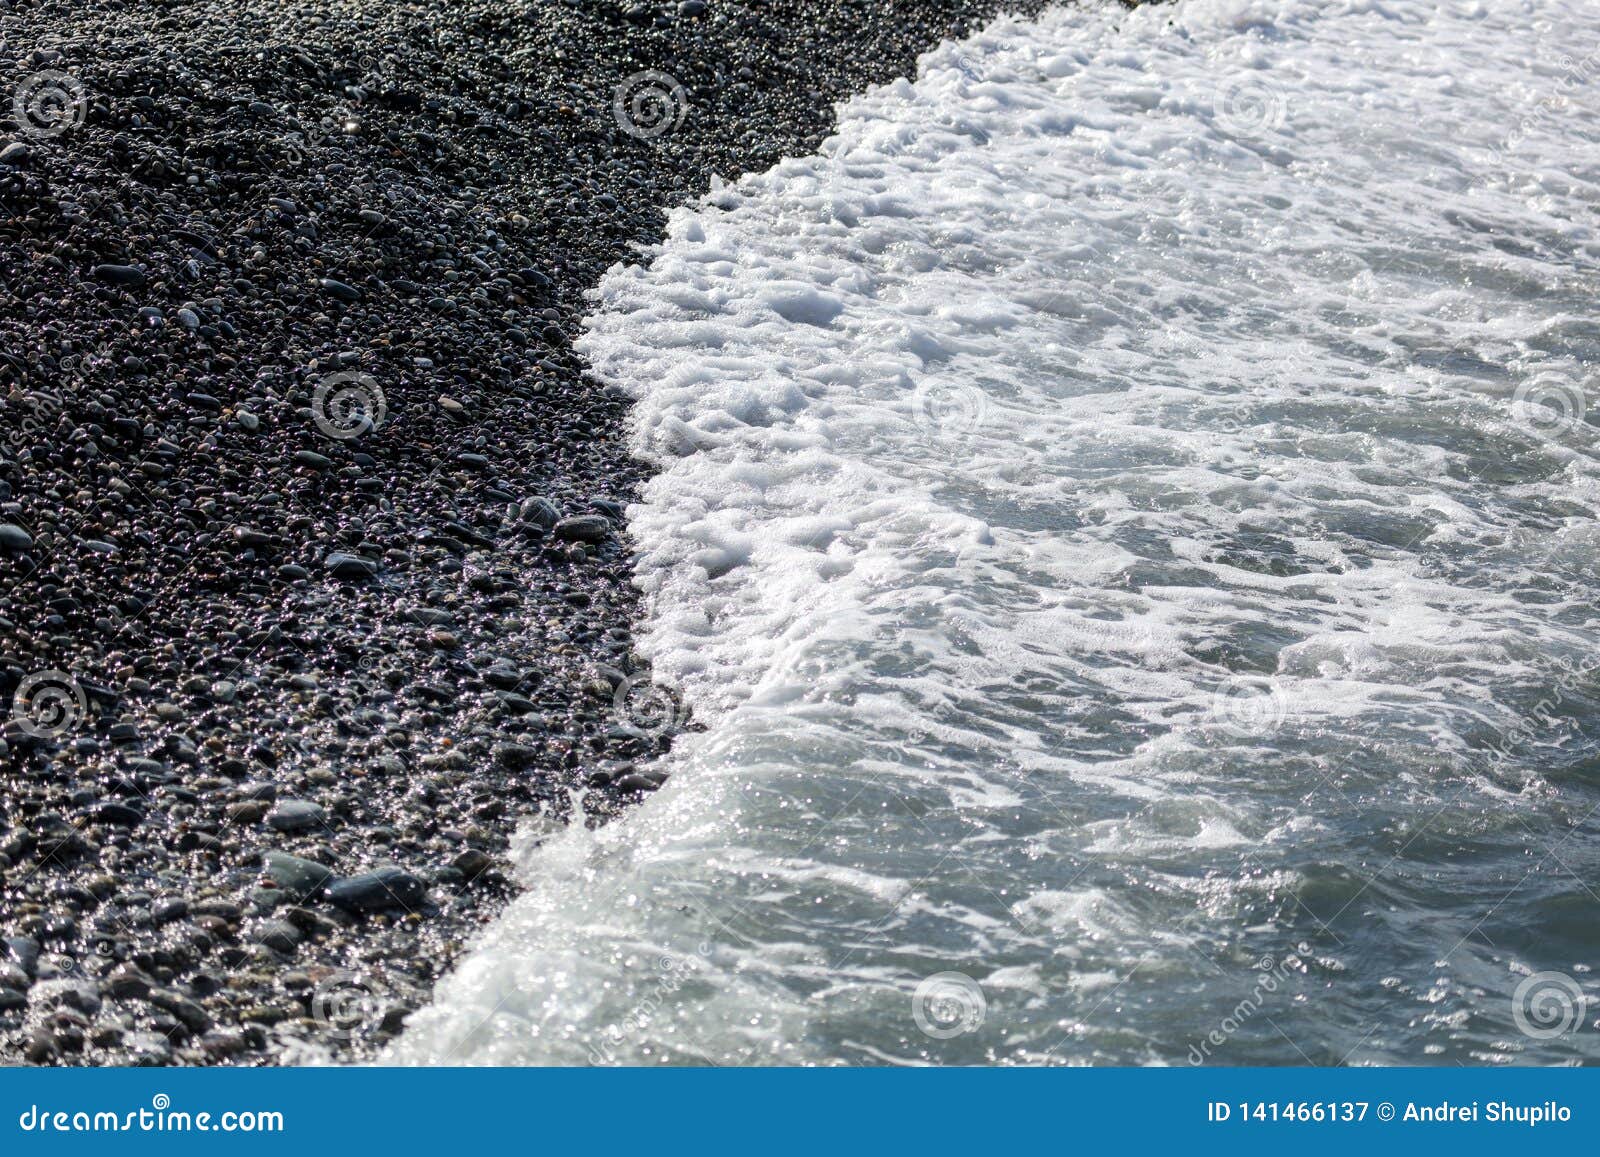 Stone Seashore As Abstract Background Stock Image Image Of Landscape